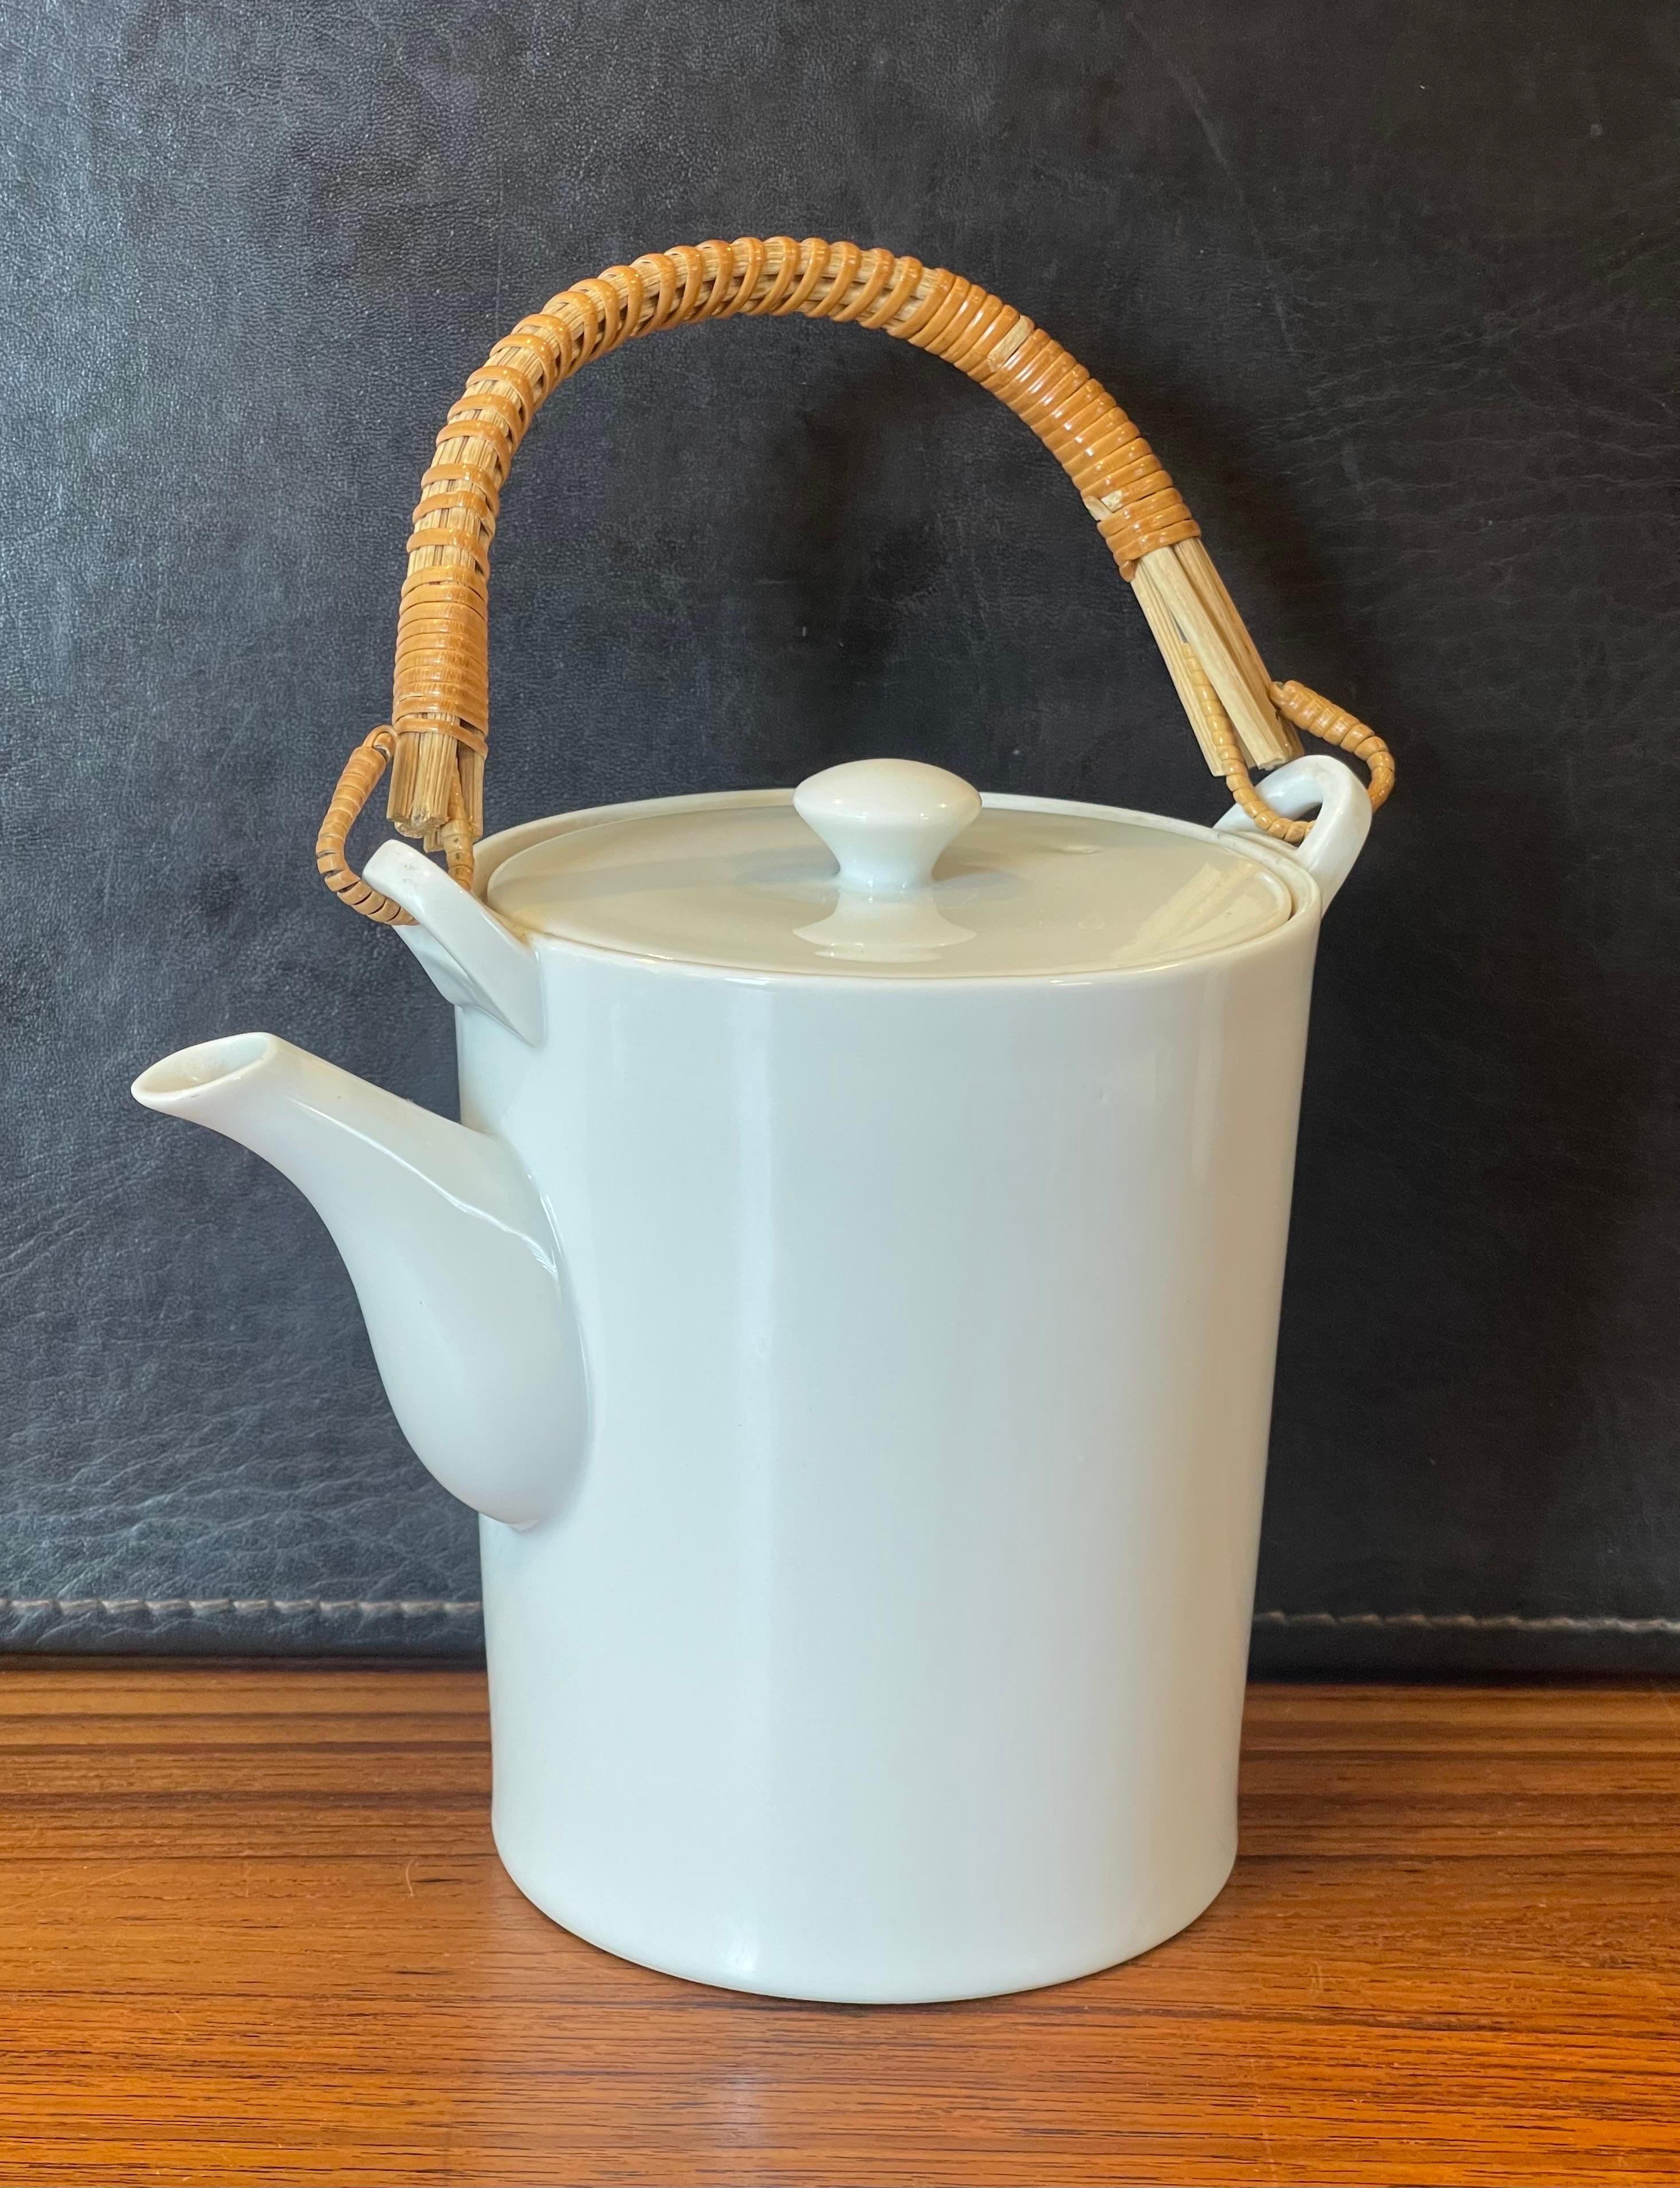 Japanese White Porcelain & Cane Handle Teapot by Kenji Fujita for Freeman Lederman